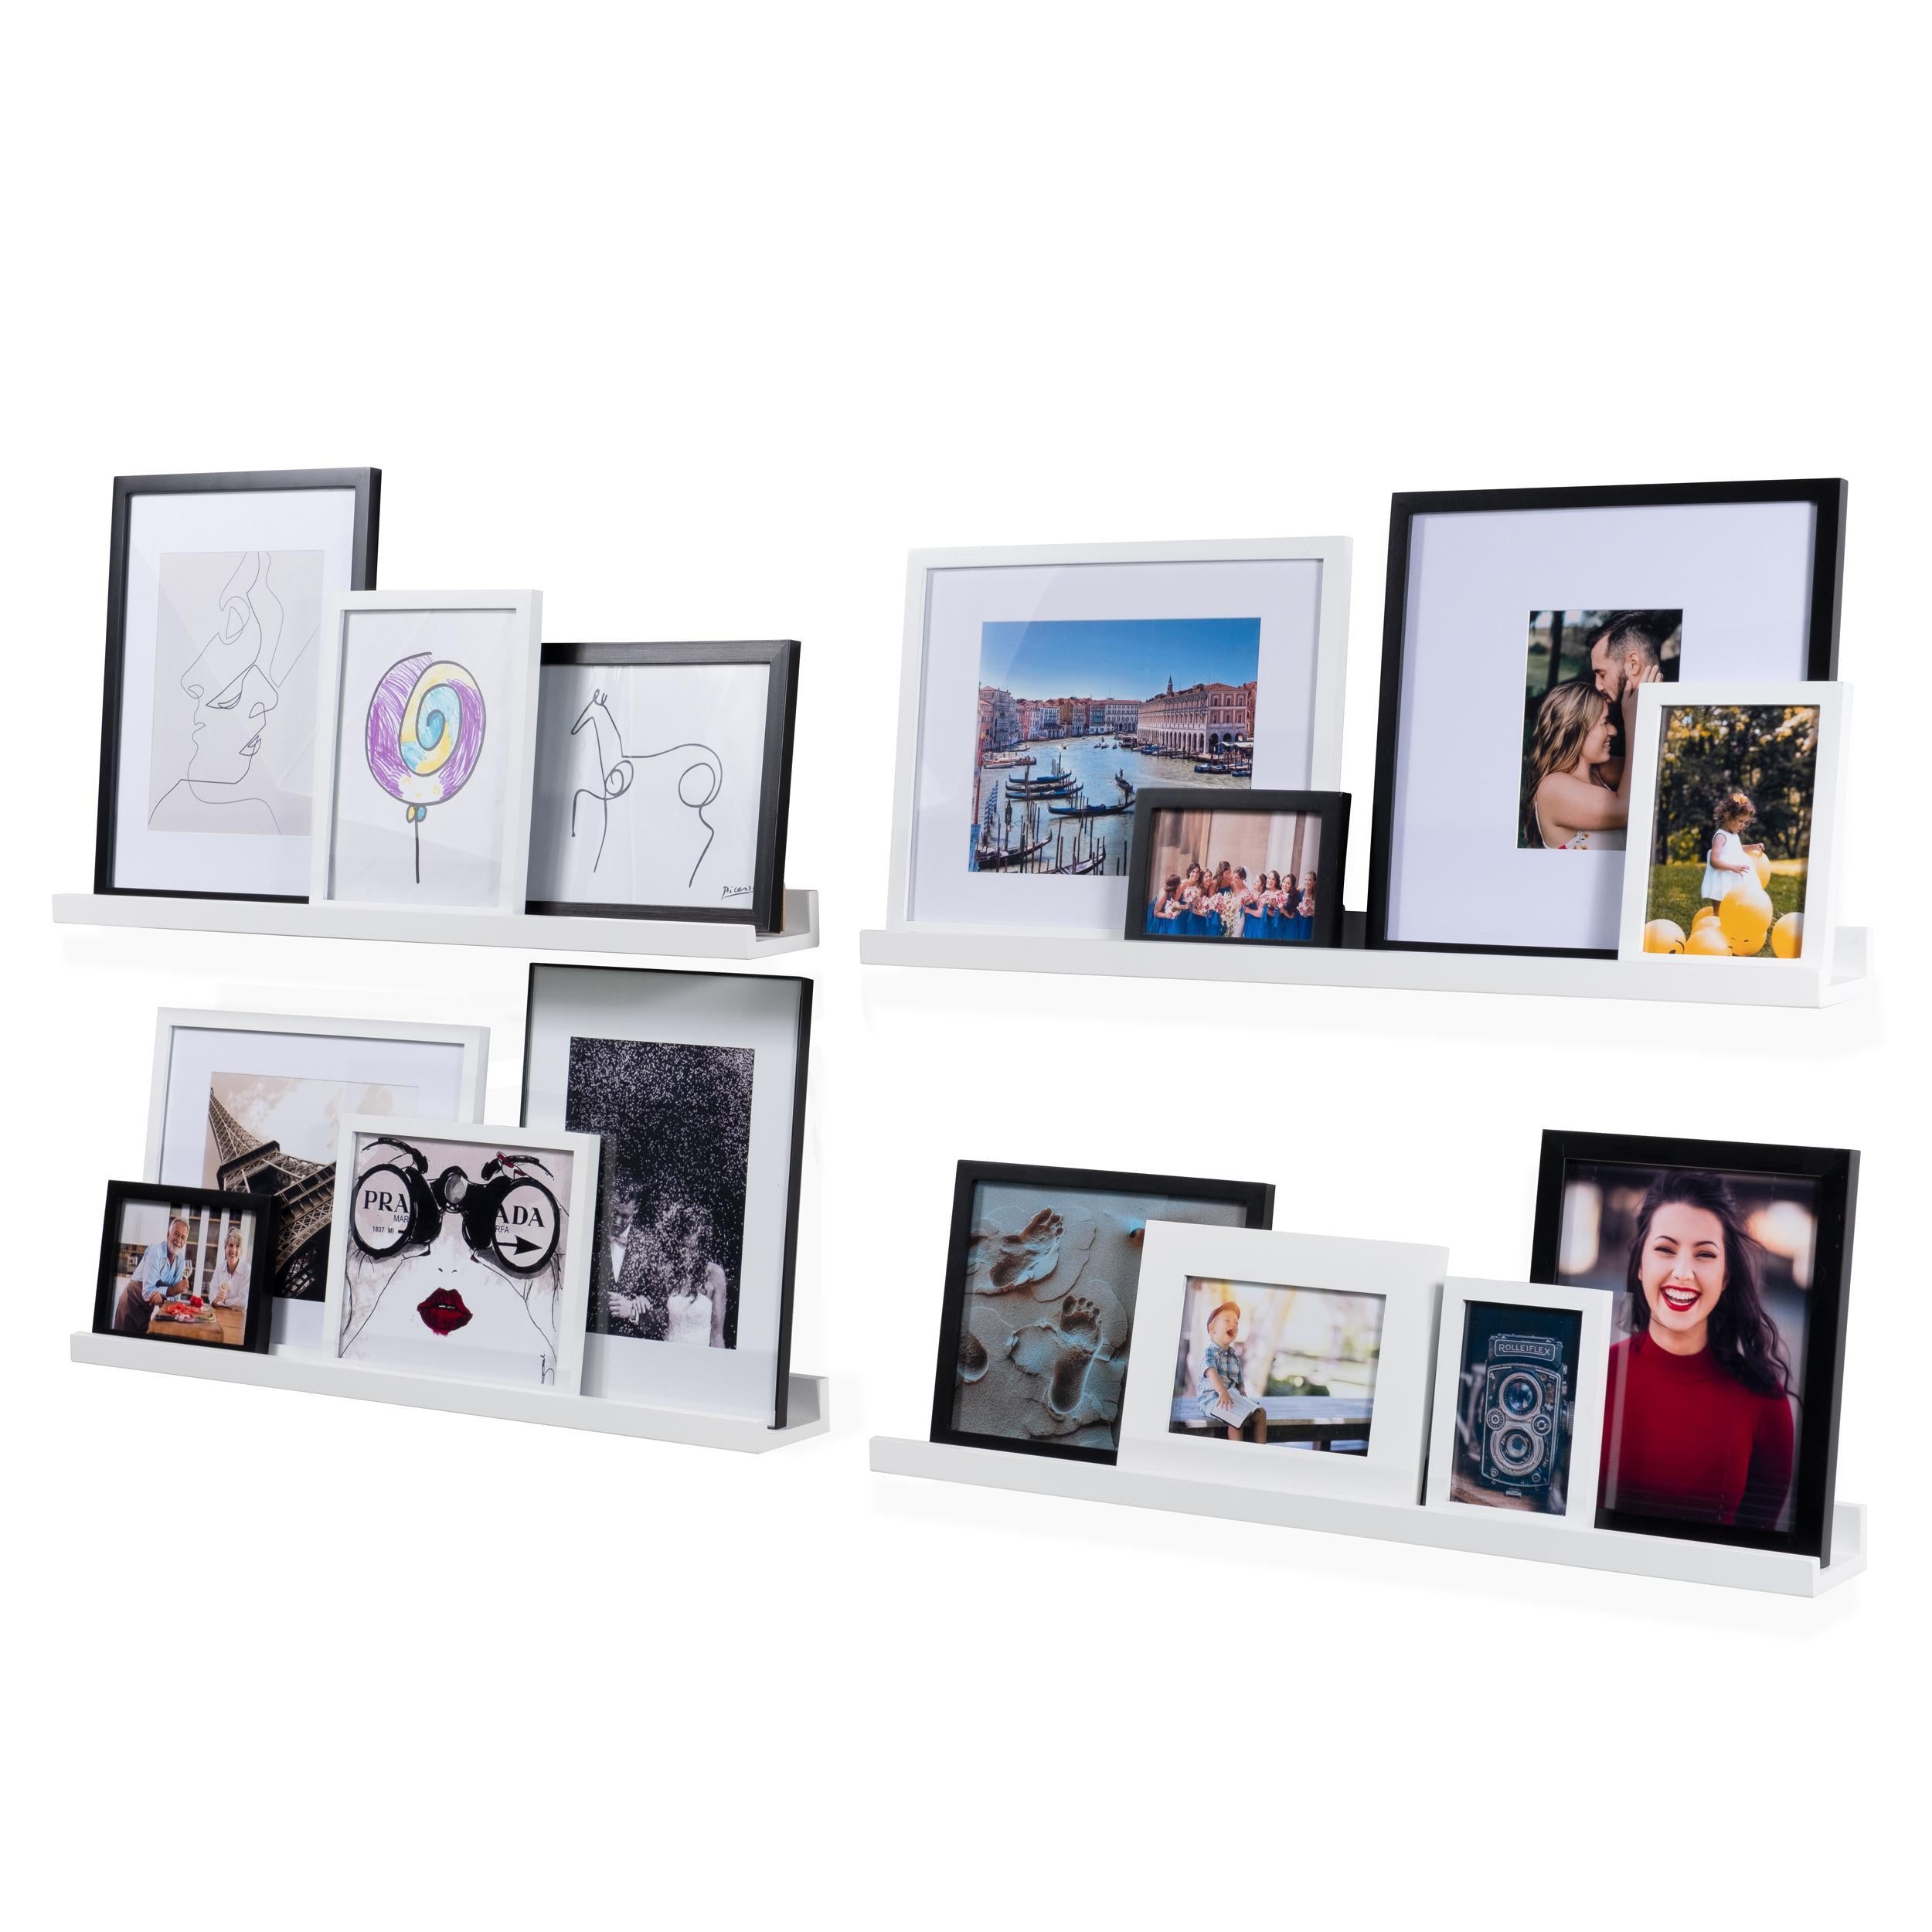 DENVER Floating Shelves Wall Bookshelf and Picture Ledge for Bedroom Decor – 30” Length x 3.8" Depth – Set of 4 - White - Wallniture